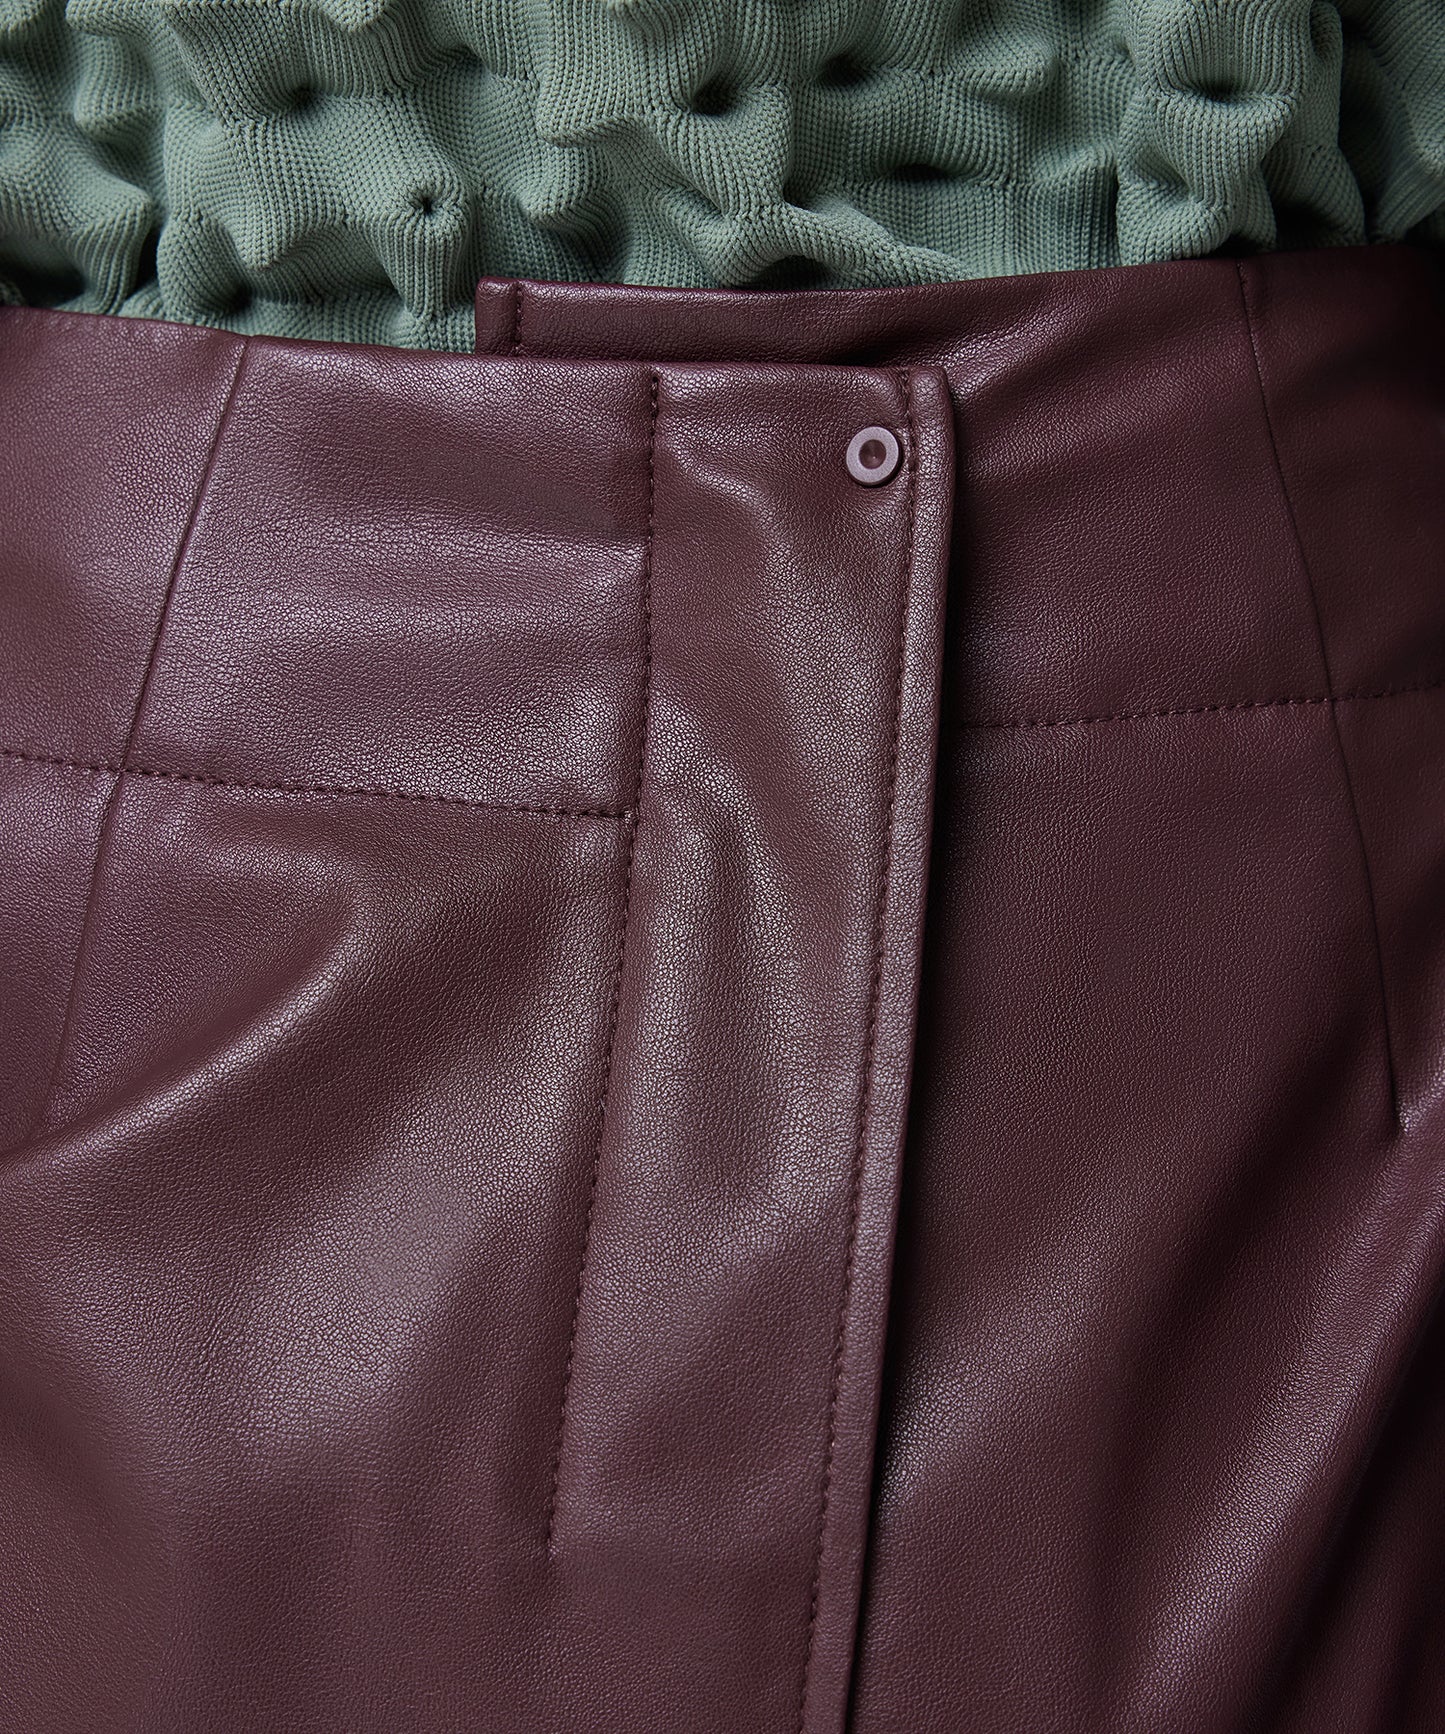 Faux Leather Asymmetric Pleated Skirt